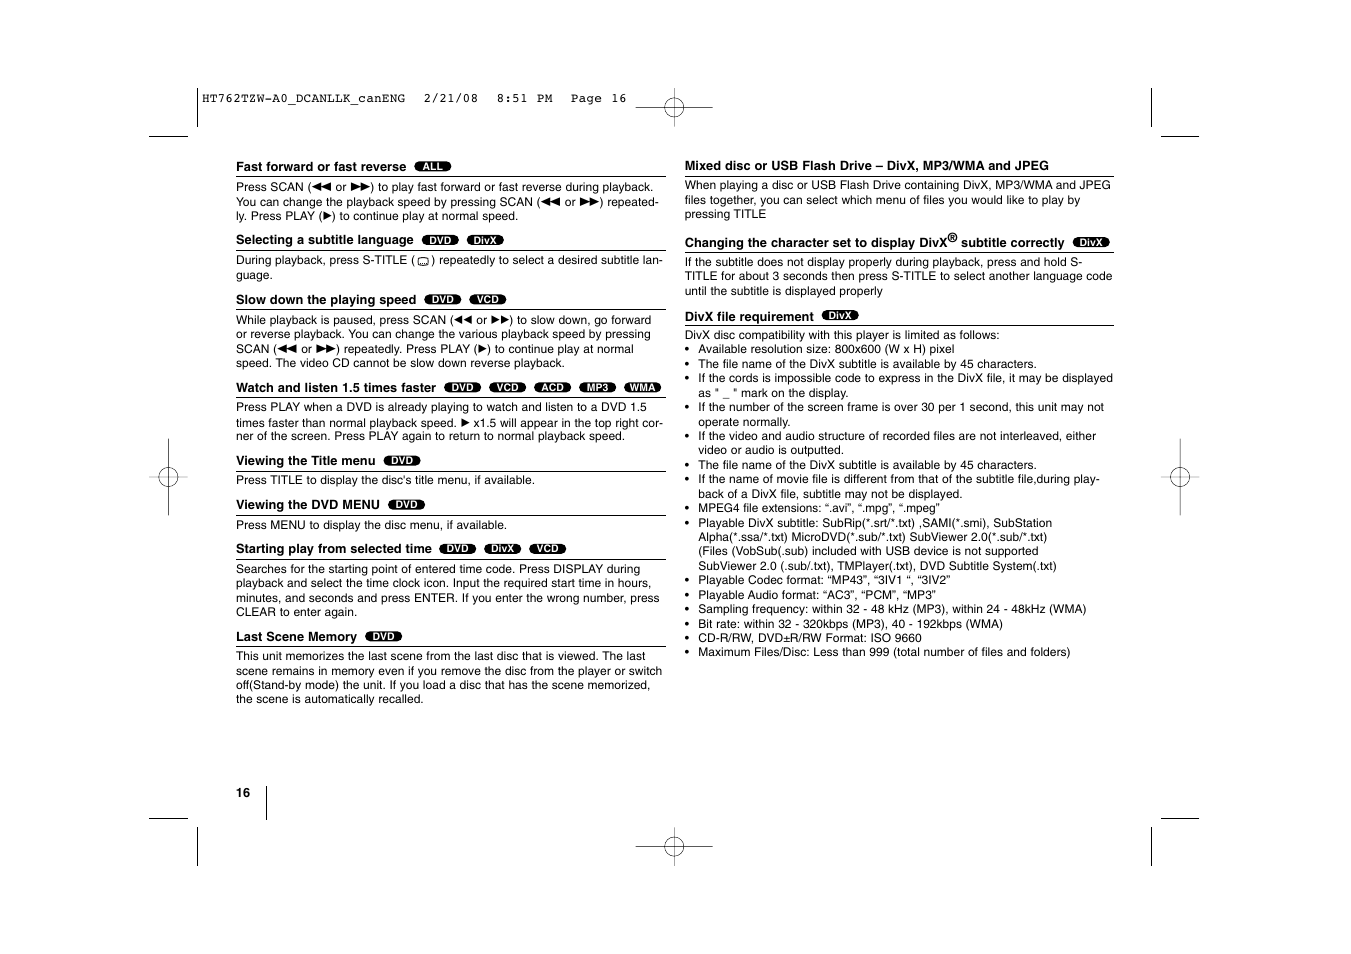 LG LHT888 User Manual | Page 16 / 24